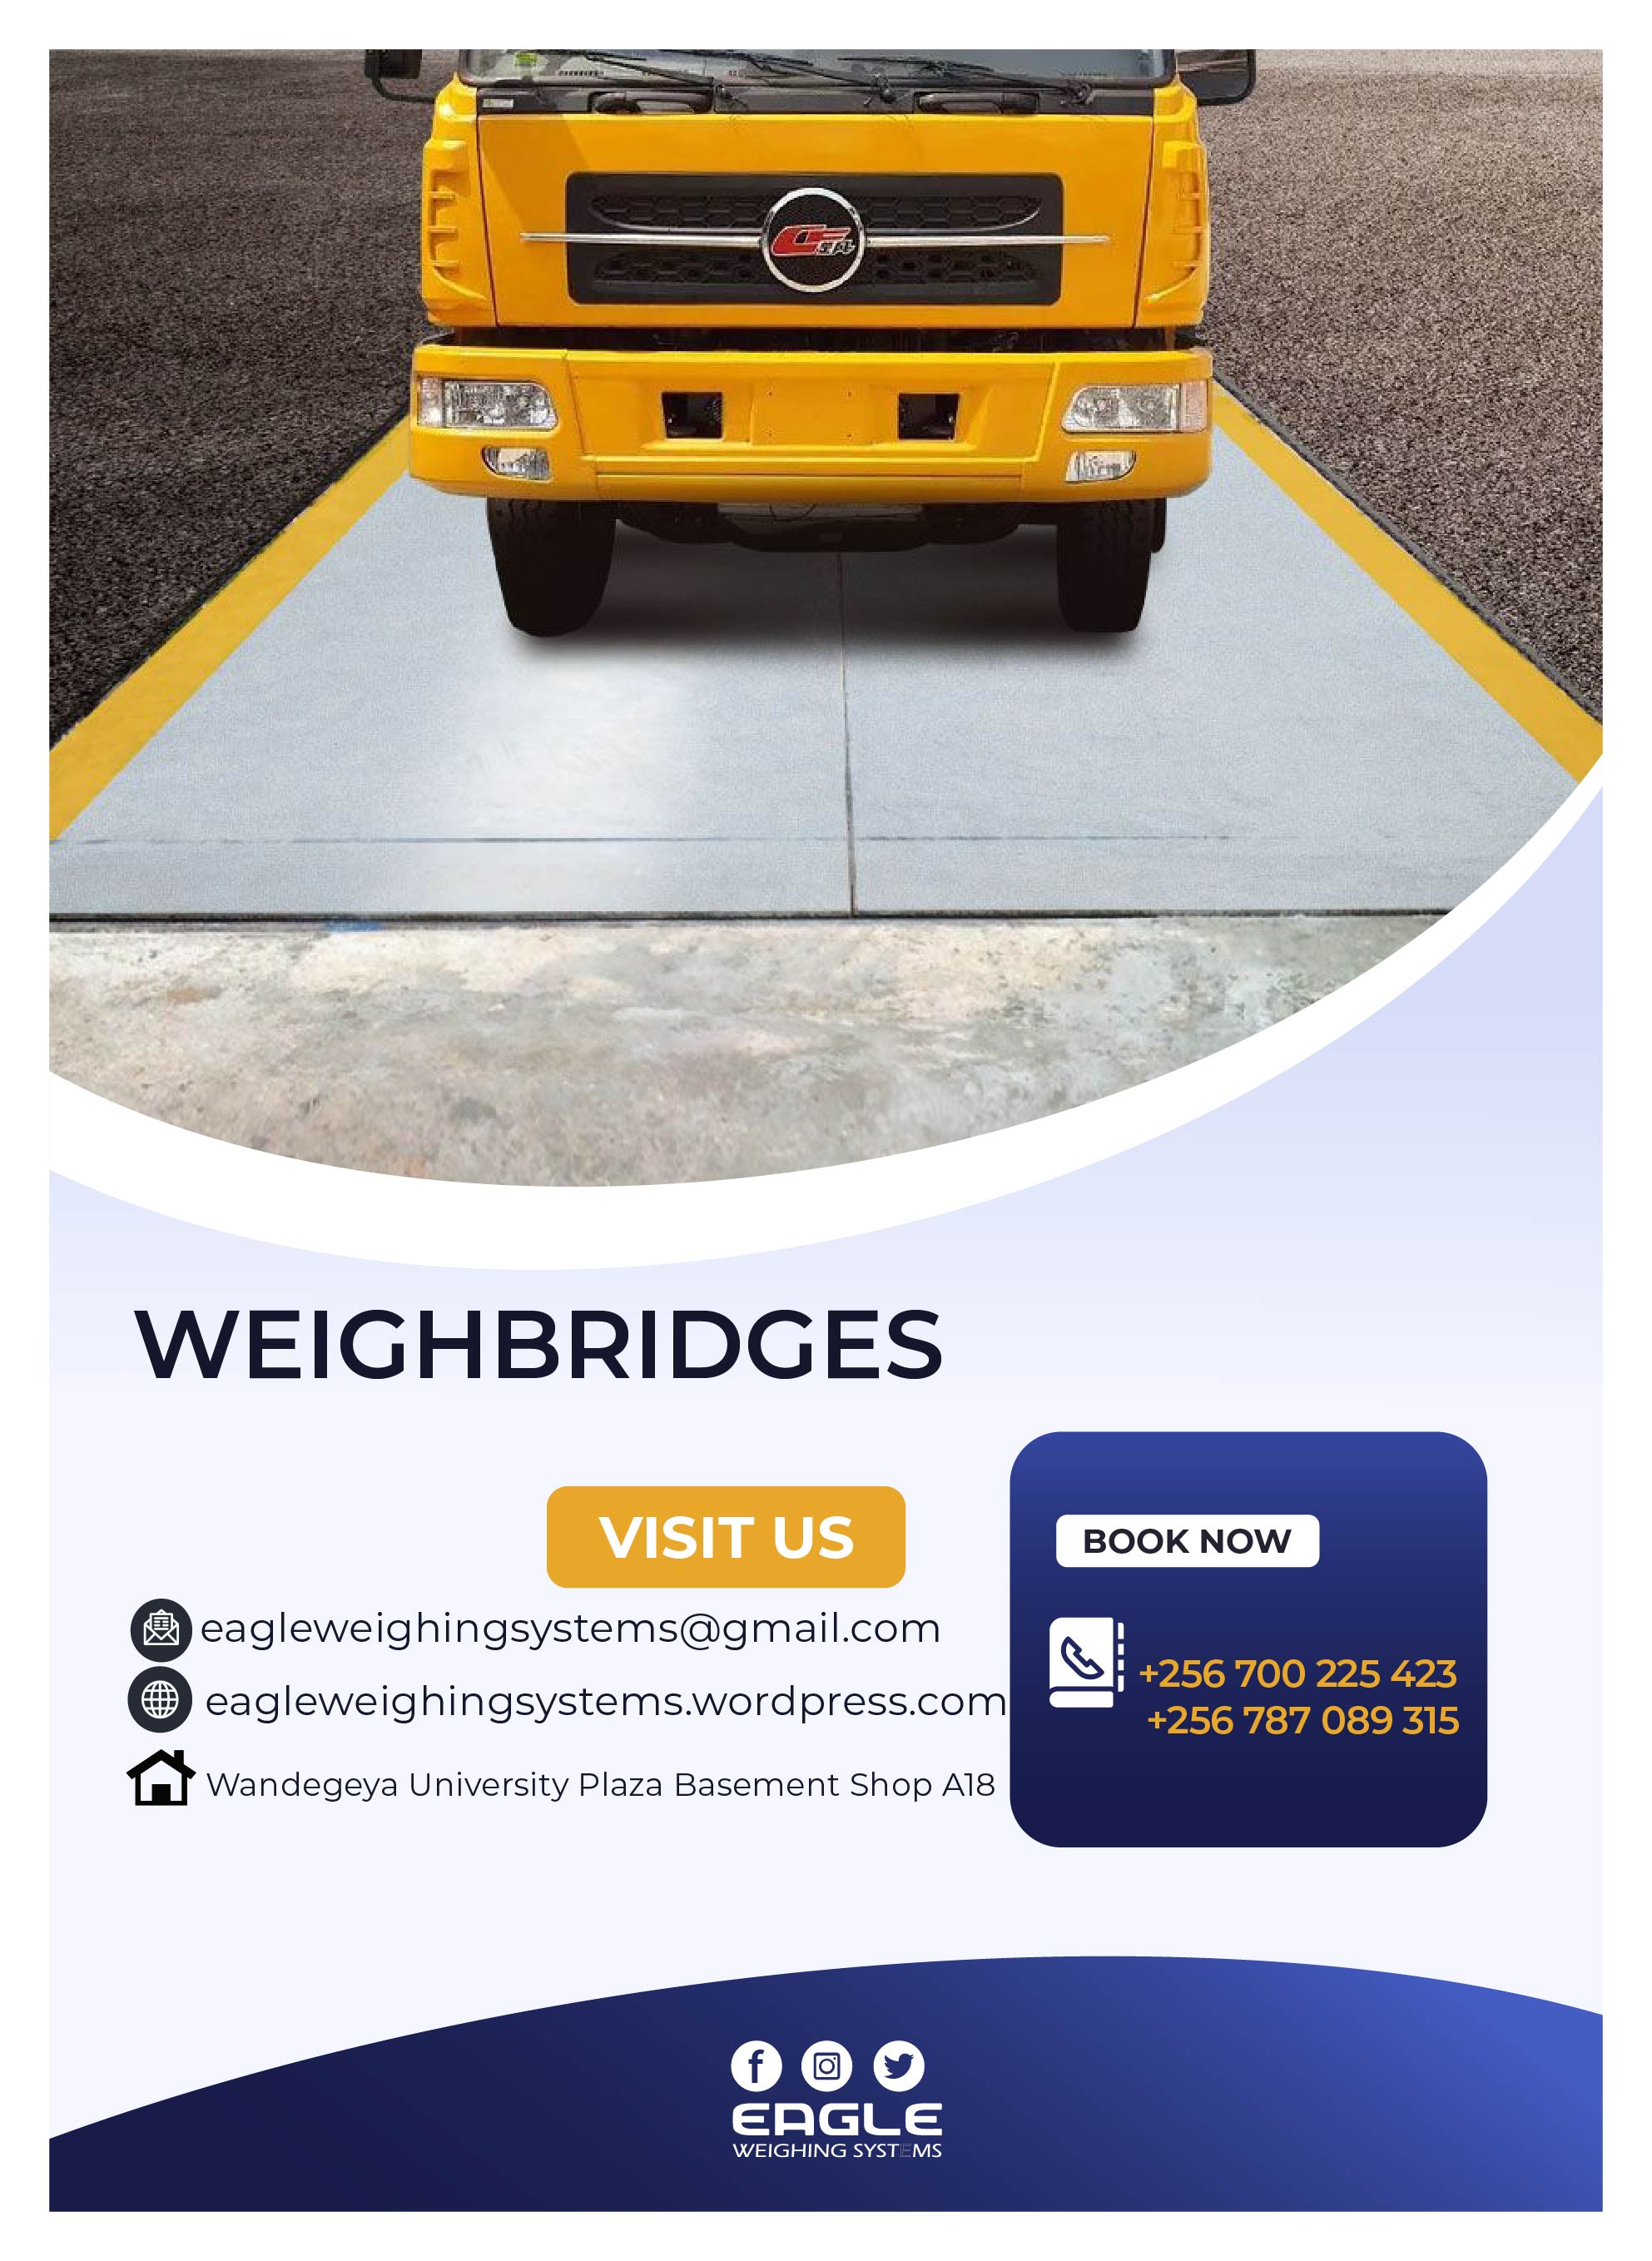 +256 (0) 700225423 Easy to transfer weighbridges in uganda, Kampala Central Division, Central, Uganda